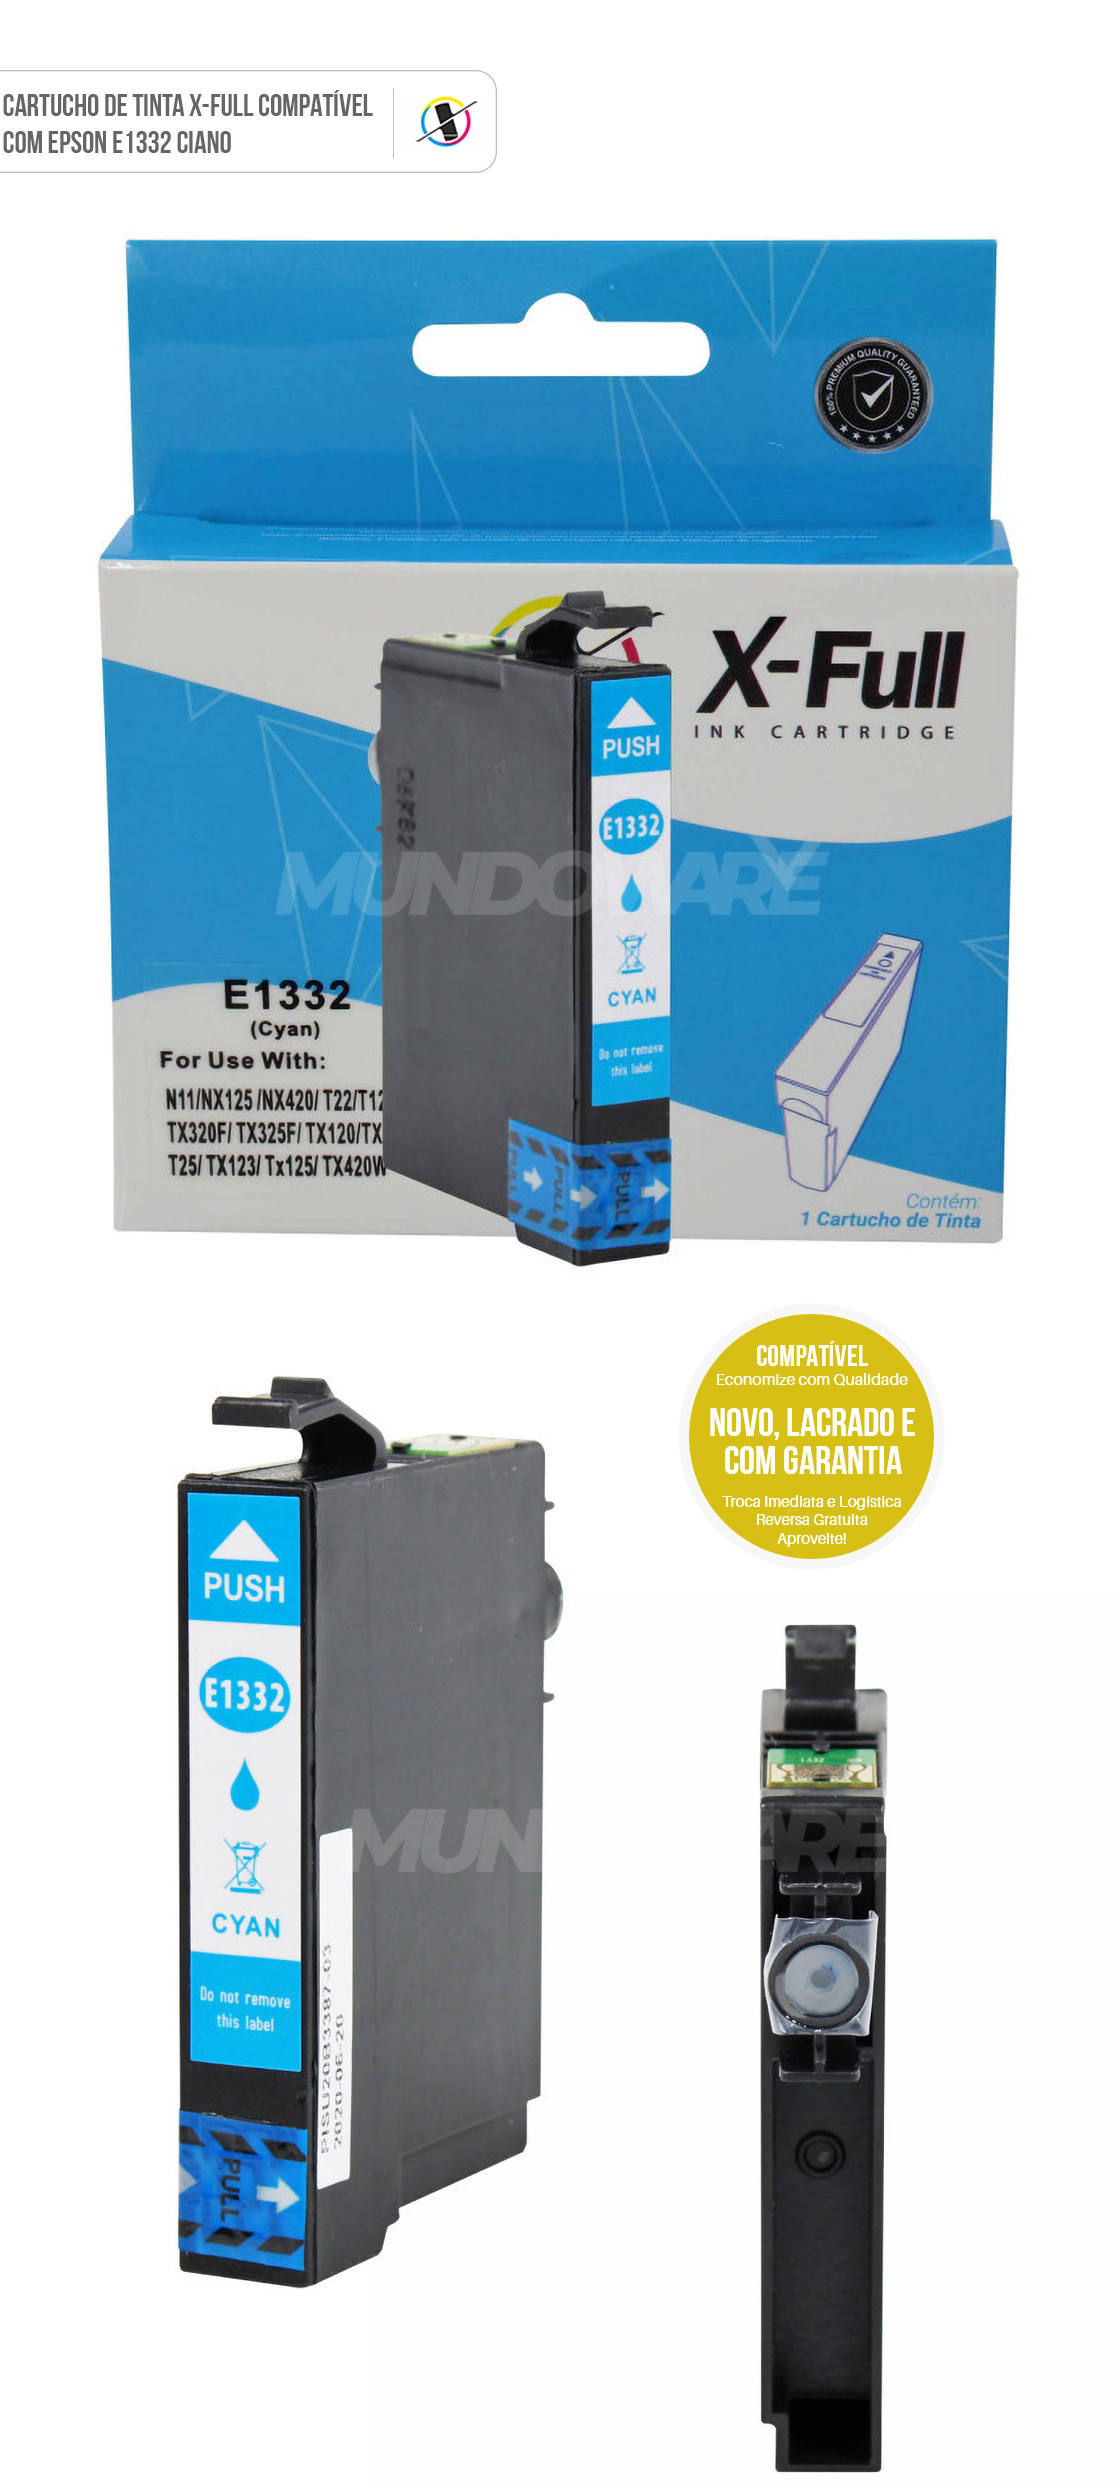 Cartucho de Tinta X-Full Compatível com Epson E1332 para Impressora T22 T25 TX120 TX420W TX320F NX420 TX123 Ciano 8ml